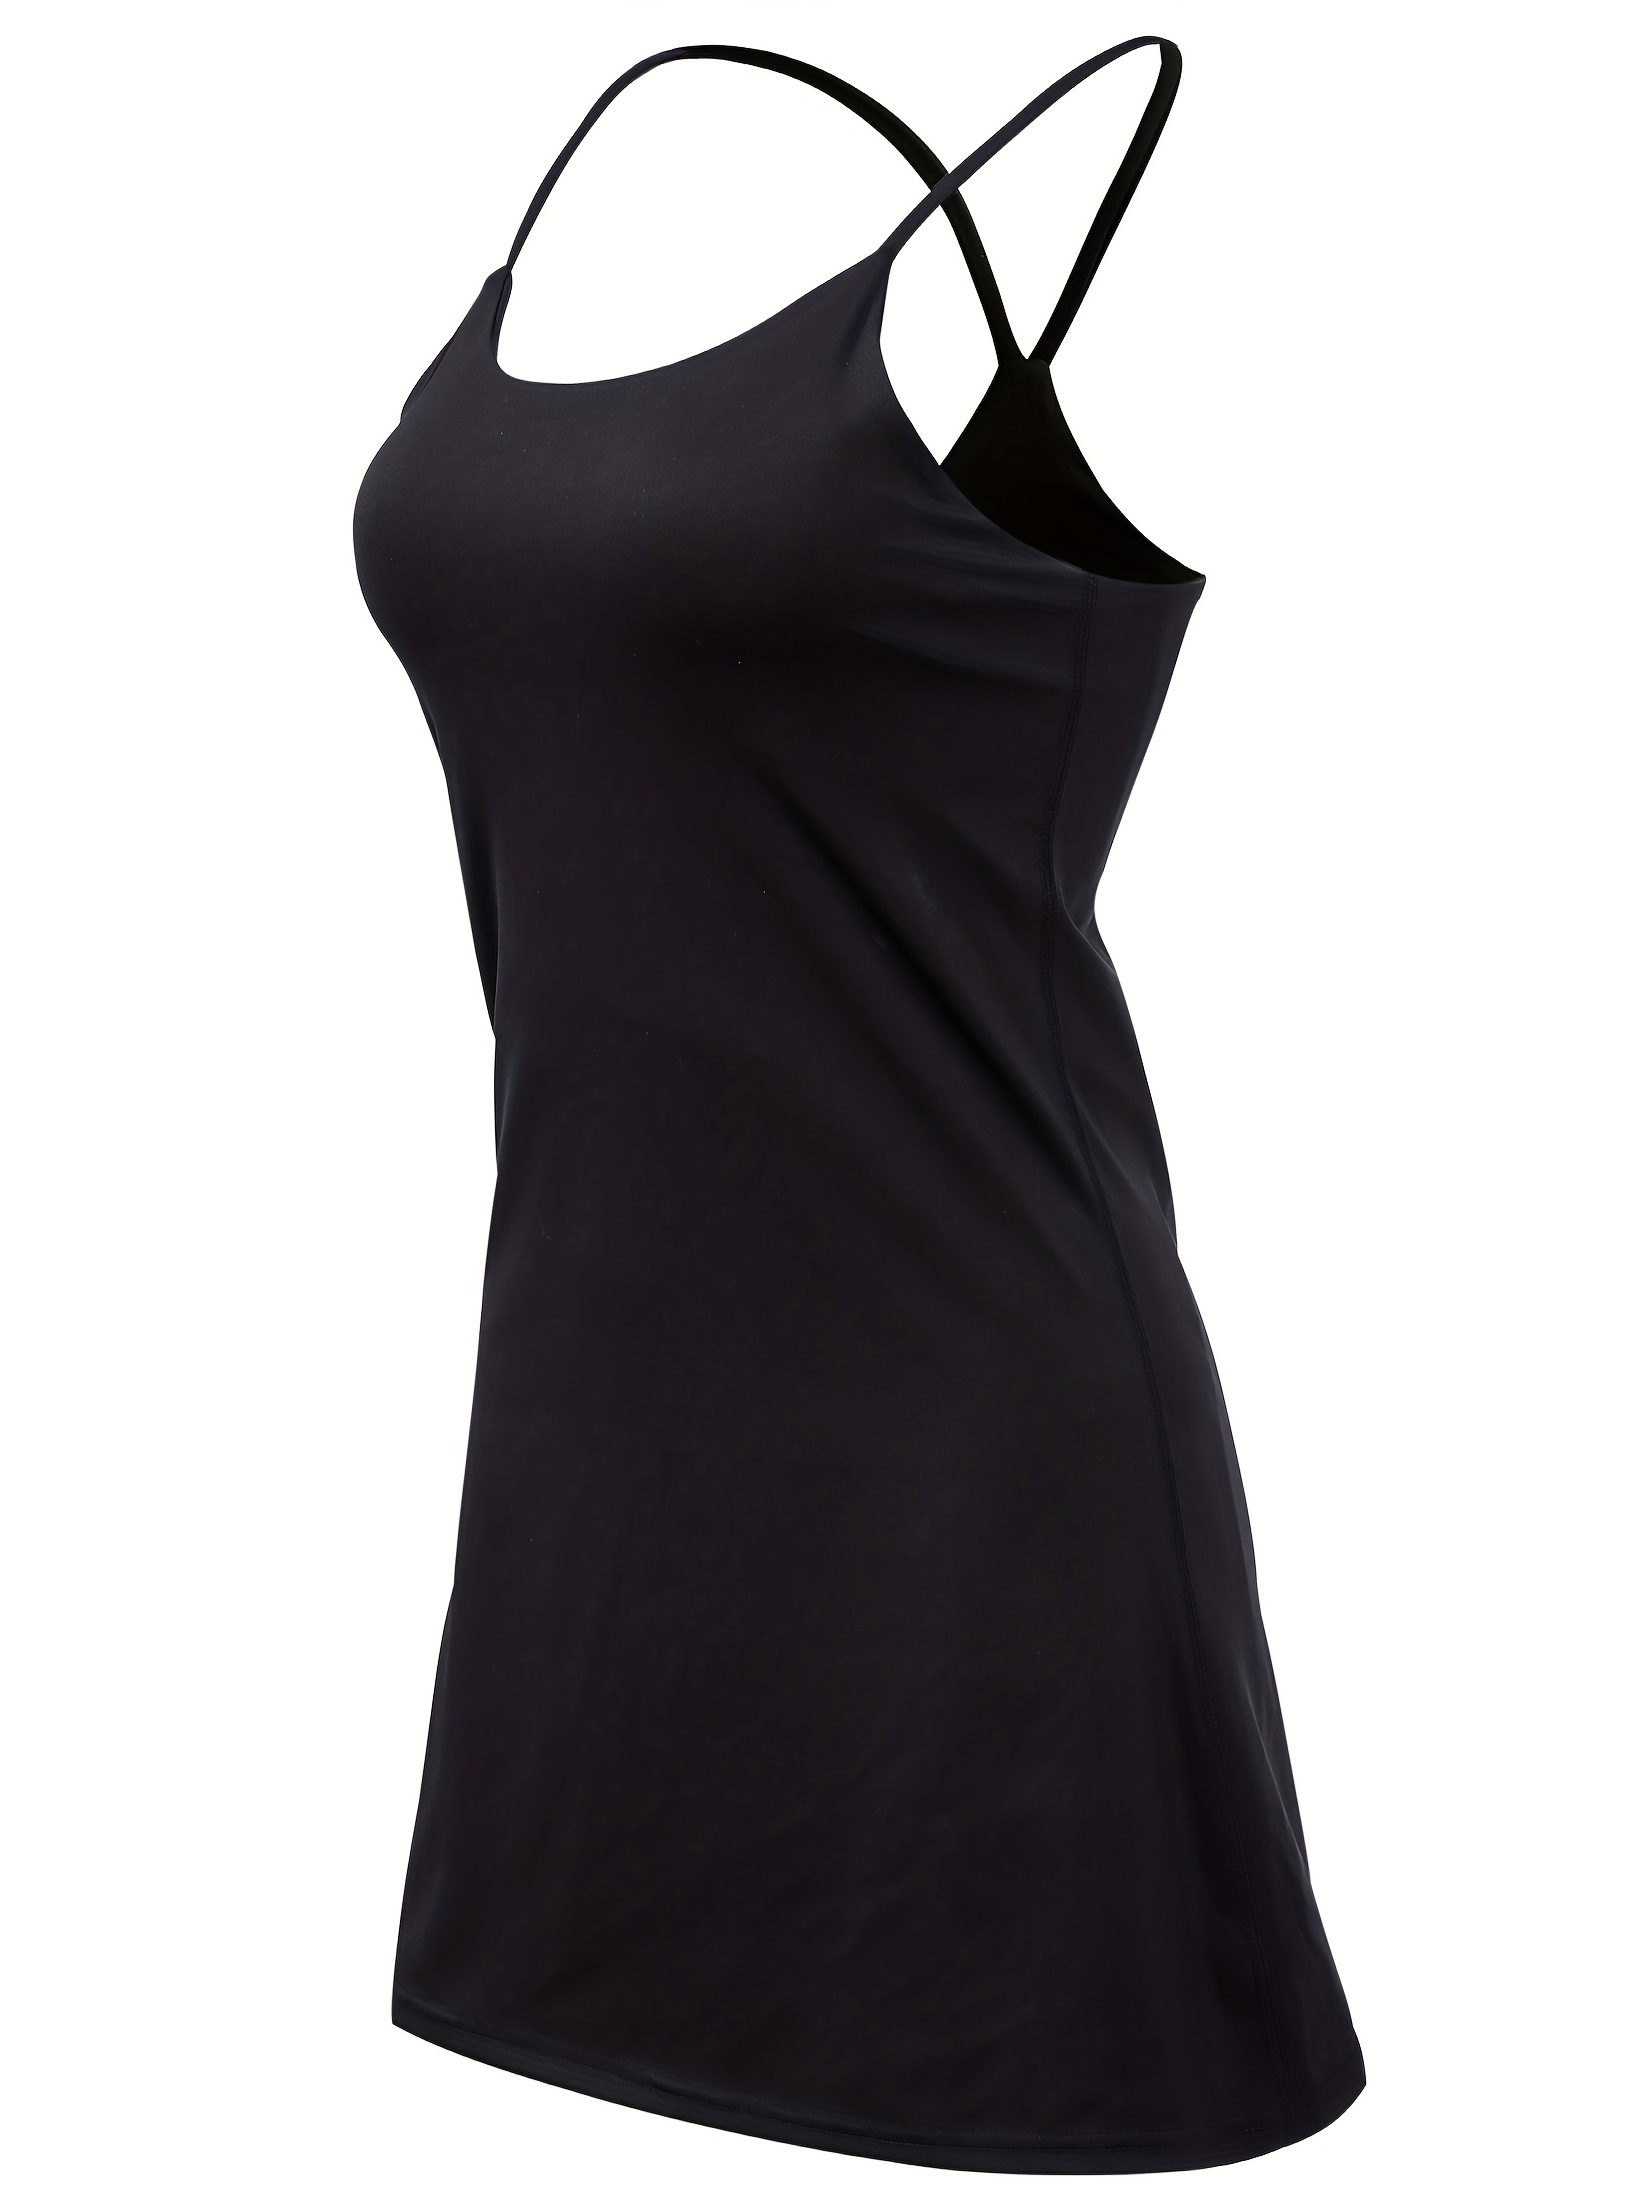 Workout Dress Built in Bra Shorts with Pockets Women Teens Cross Back  Sleeveless Athletic Tennis Golf Mini Dress (X-Large, Gray) 